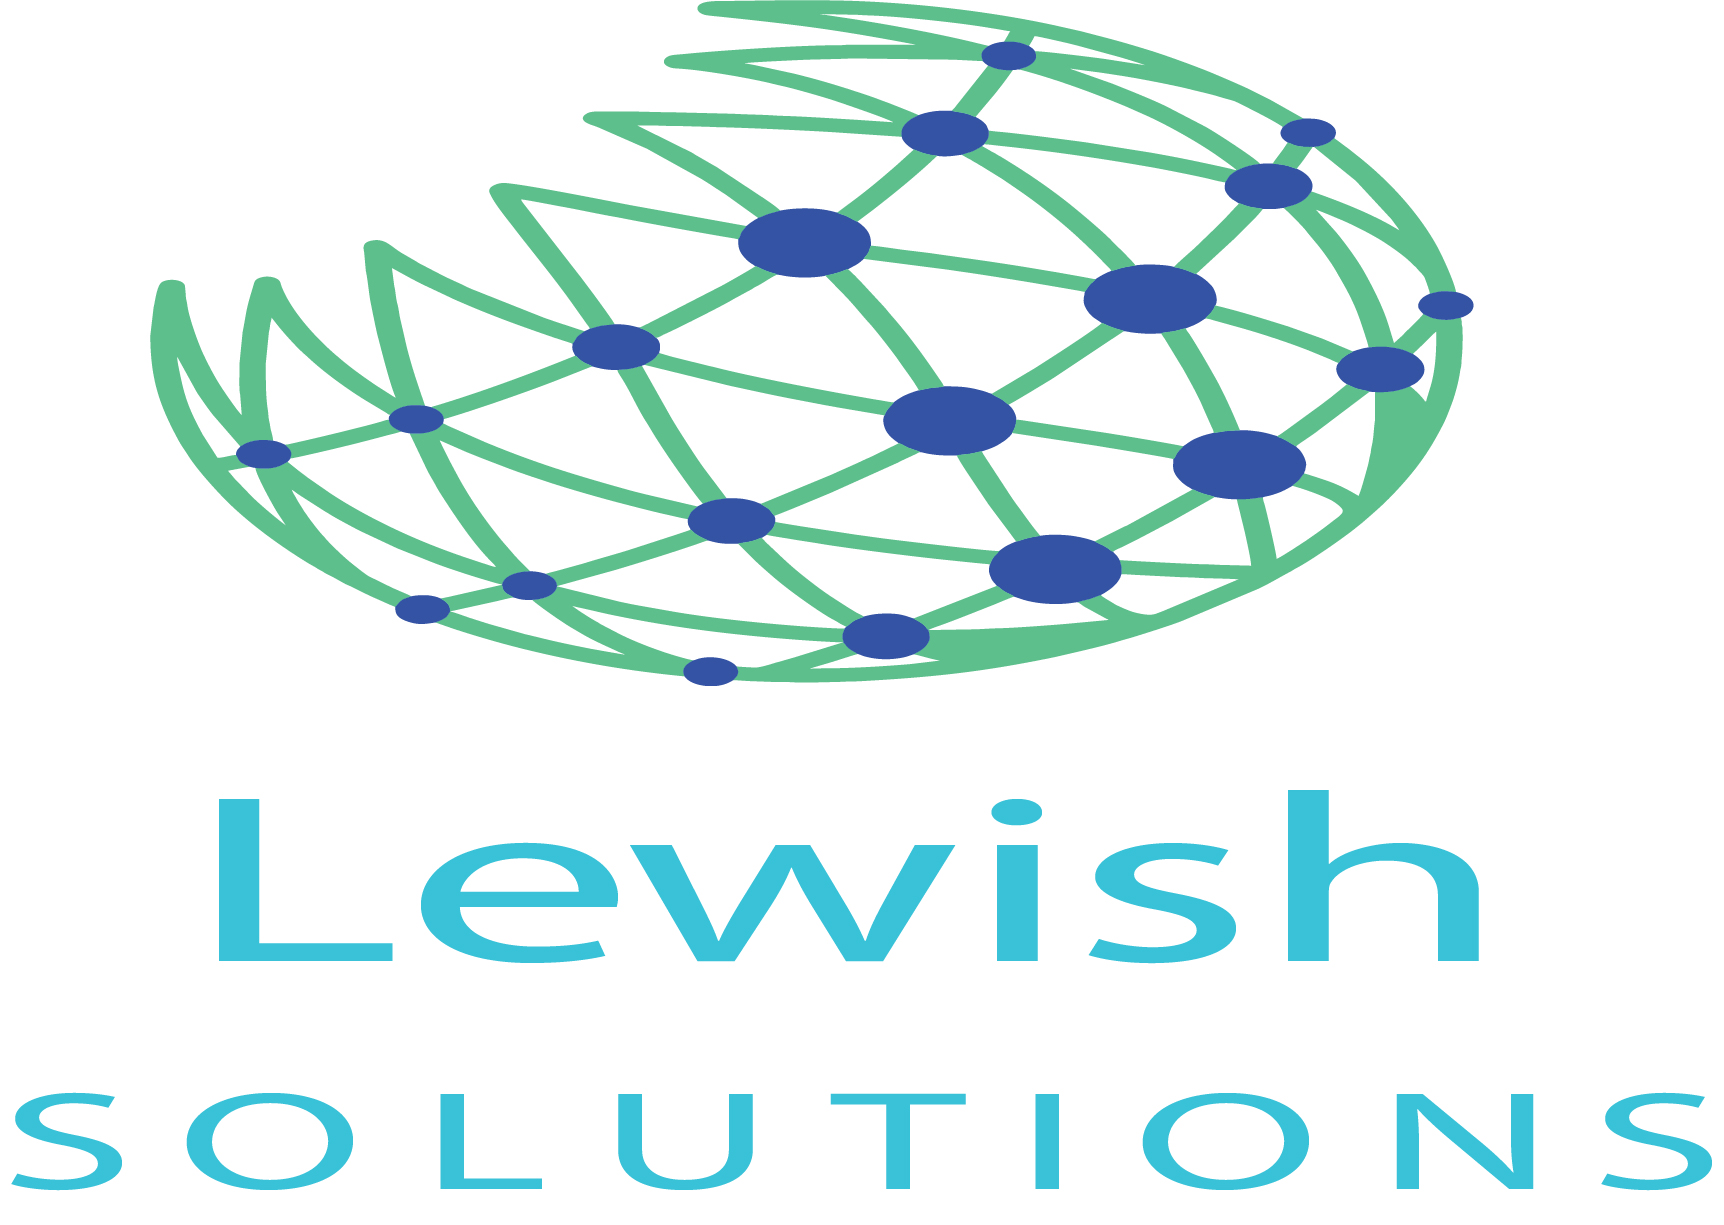 Lewish Solutions